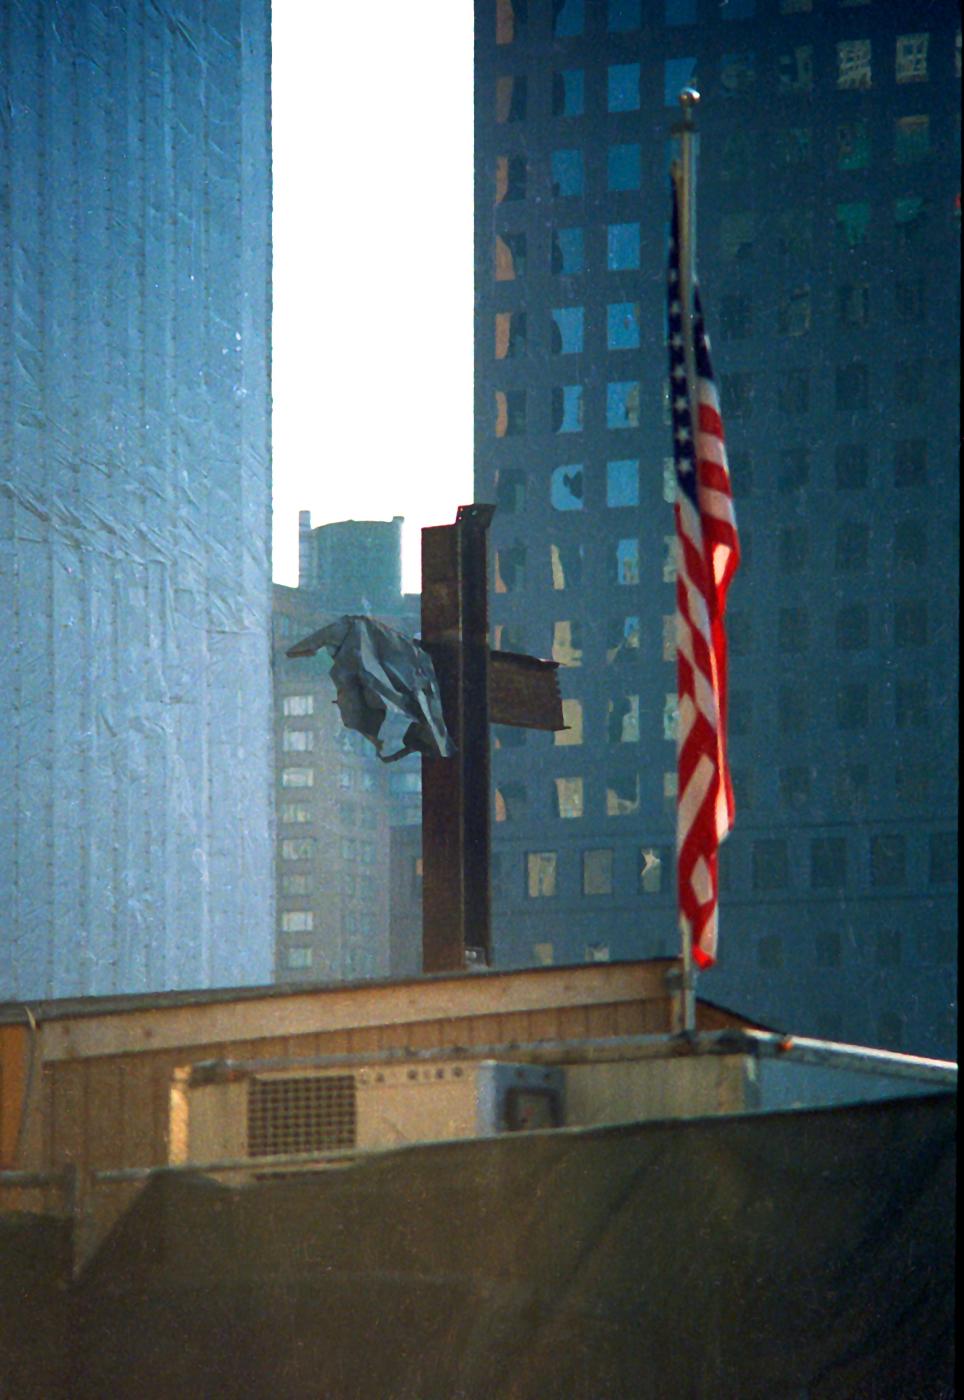 Ground Zero  | Buy this image